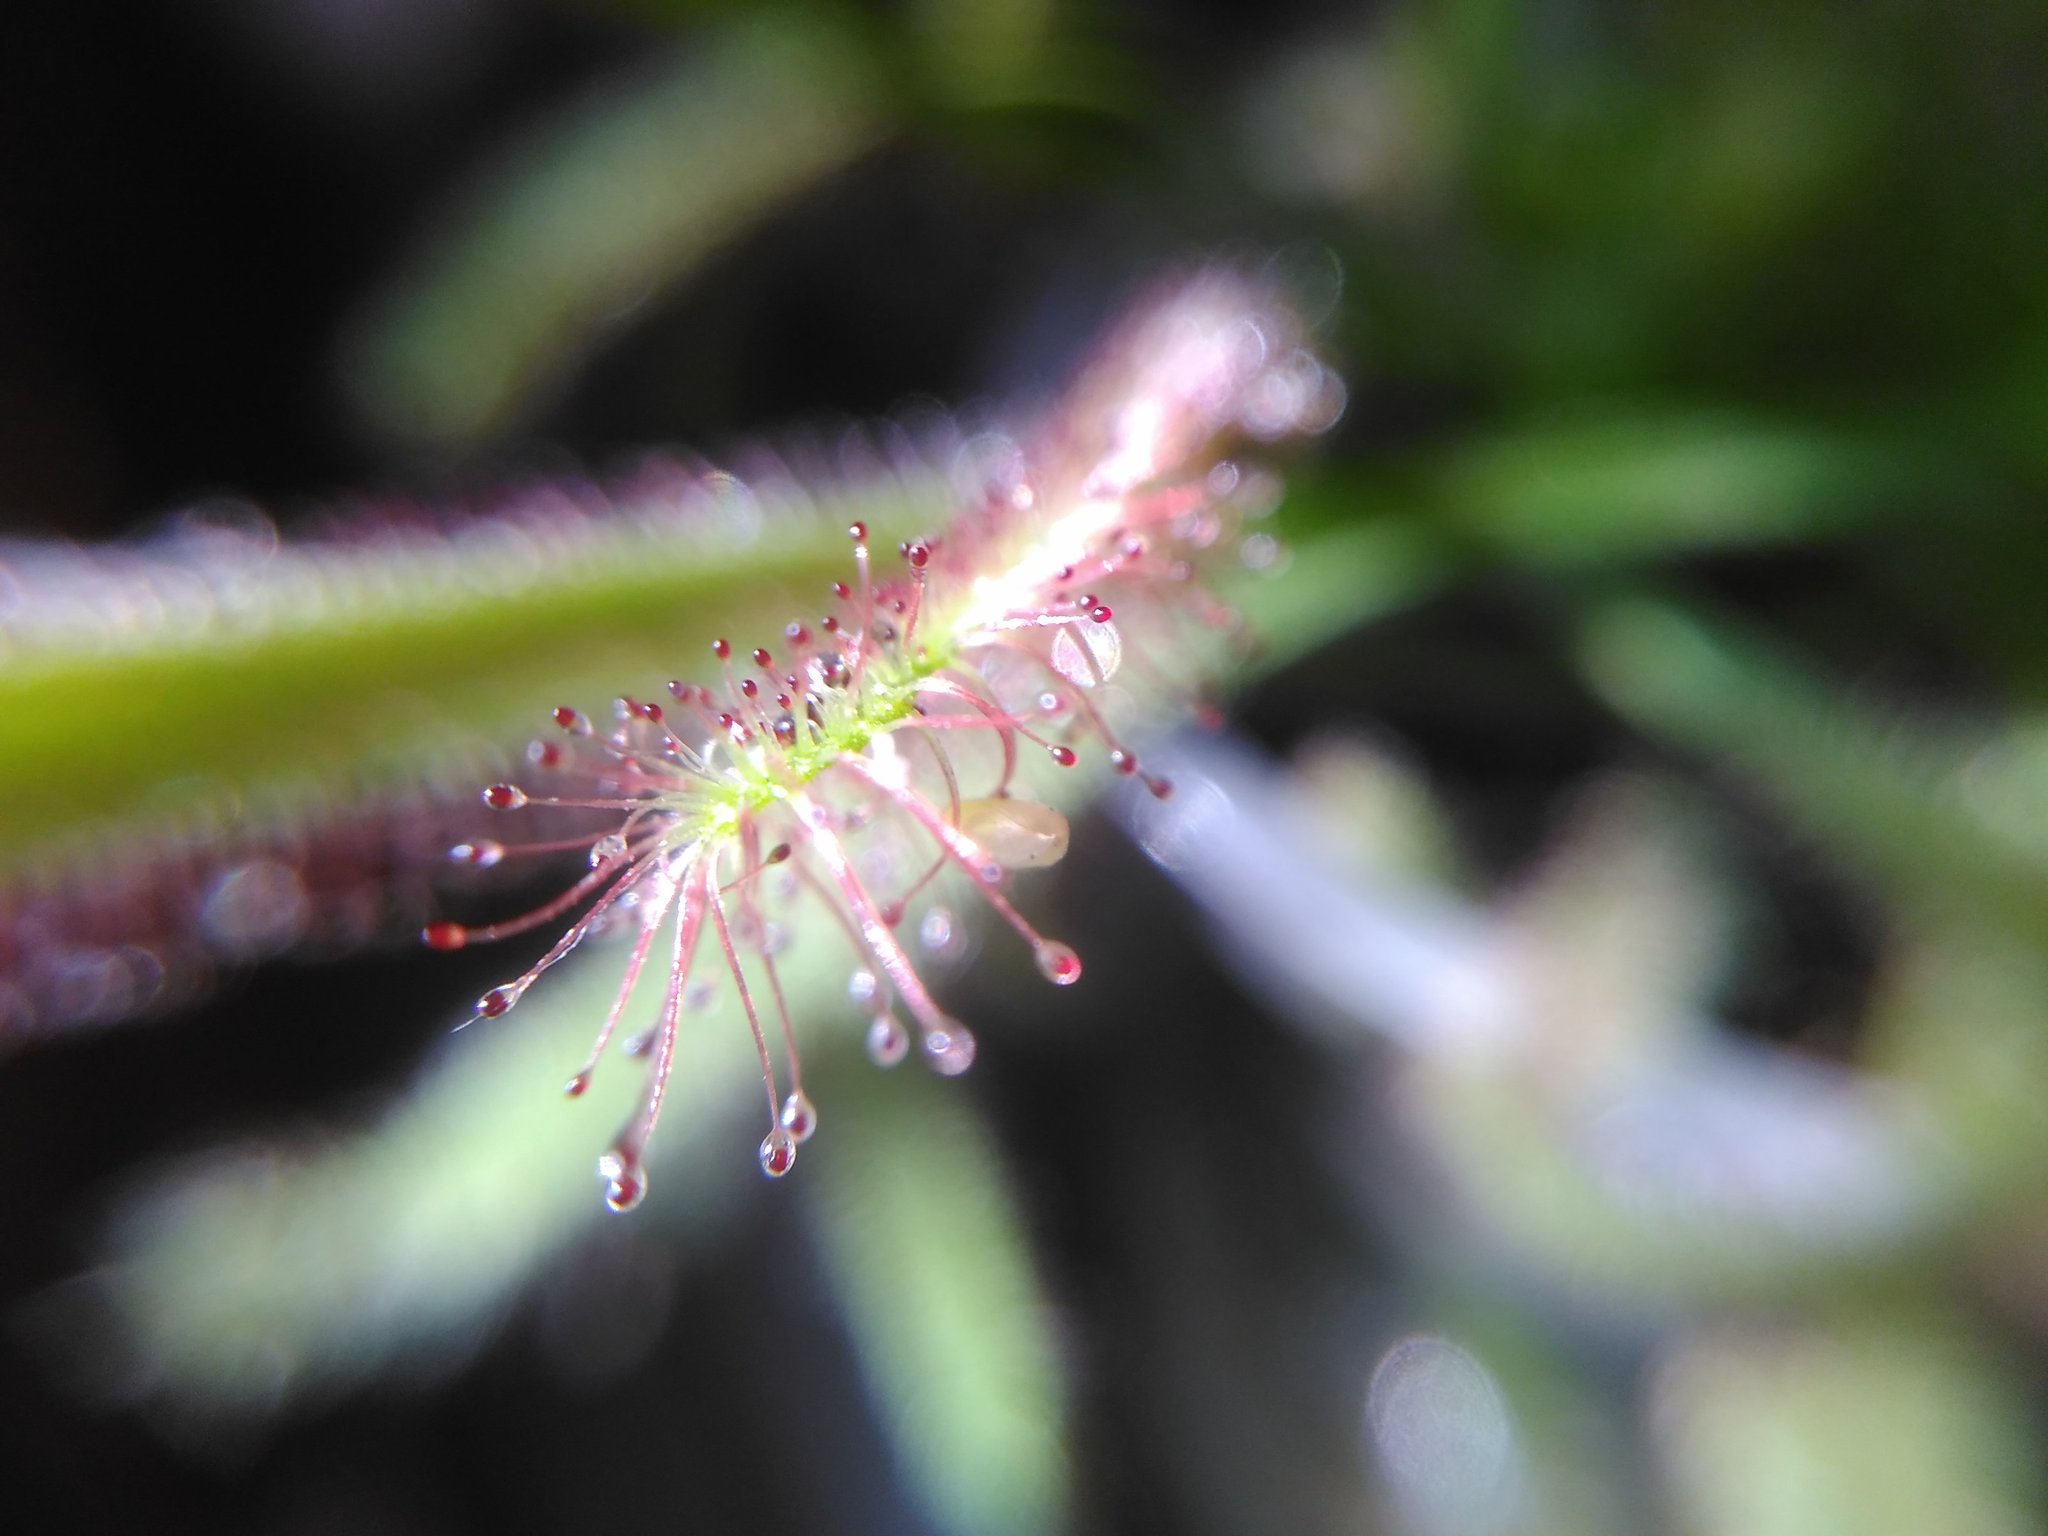 Detail of drosera capensis leaf tip